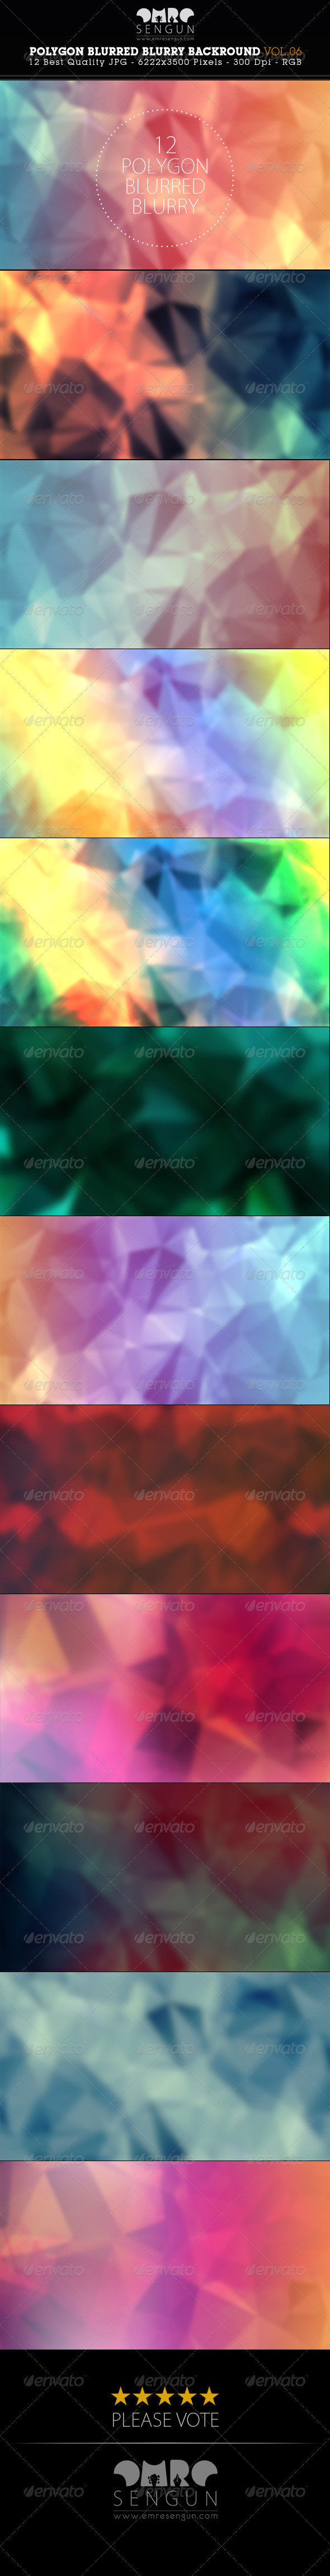 Blurred blurry polygon background vol5